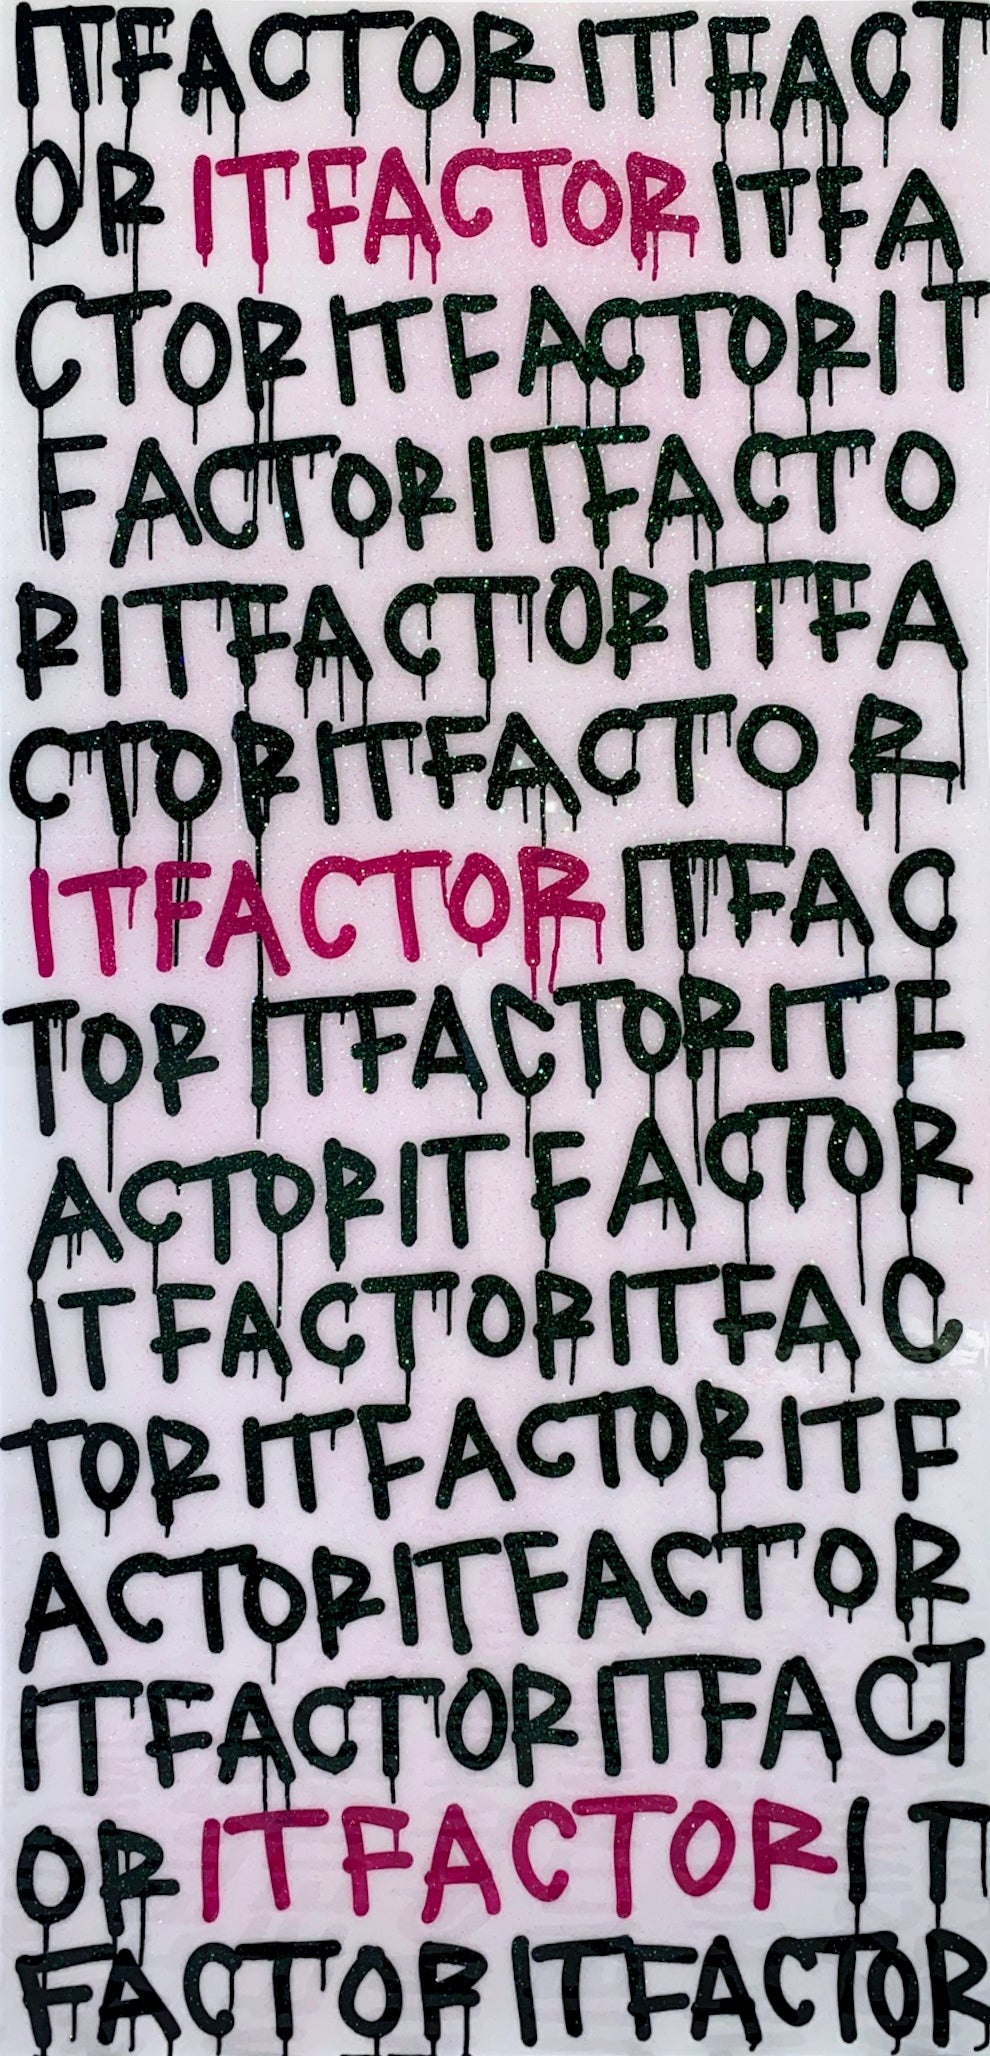 "IT Factor"